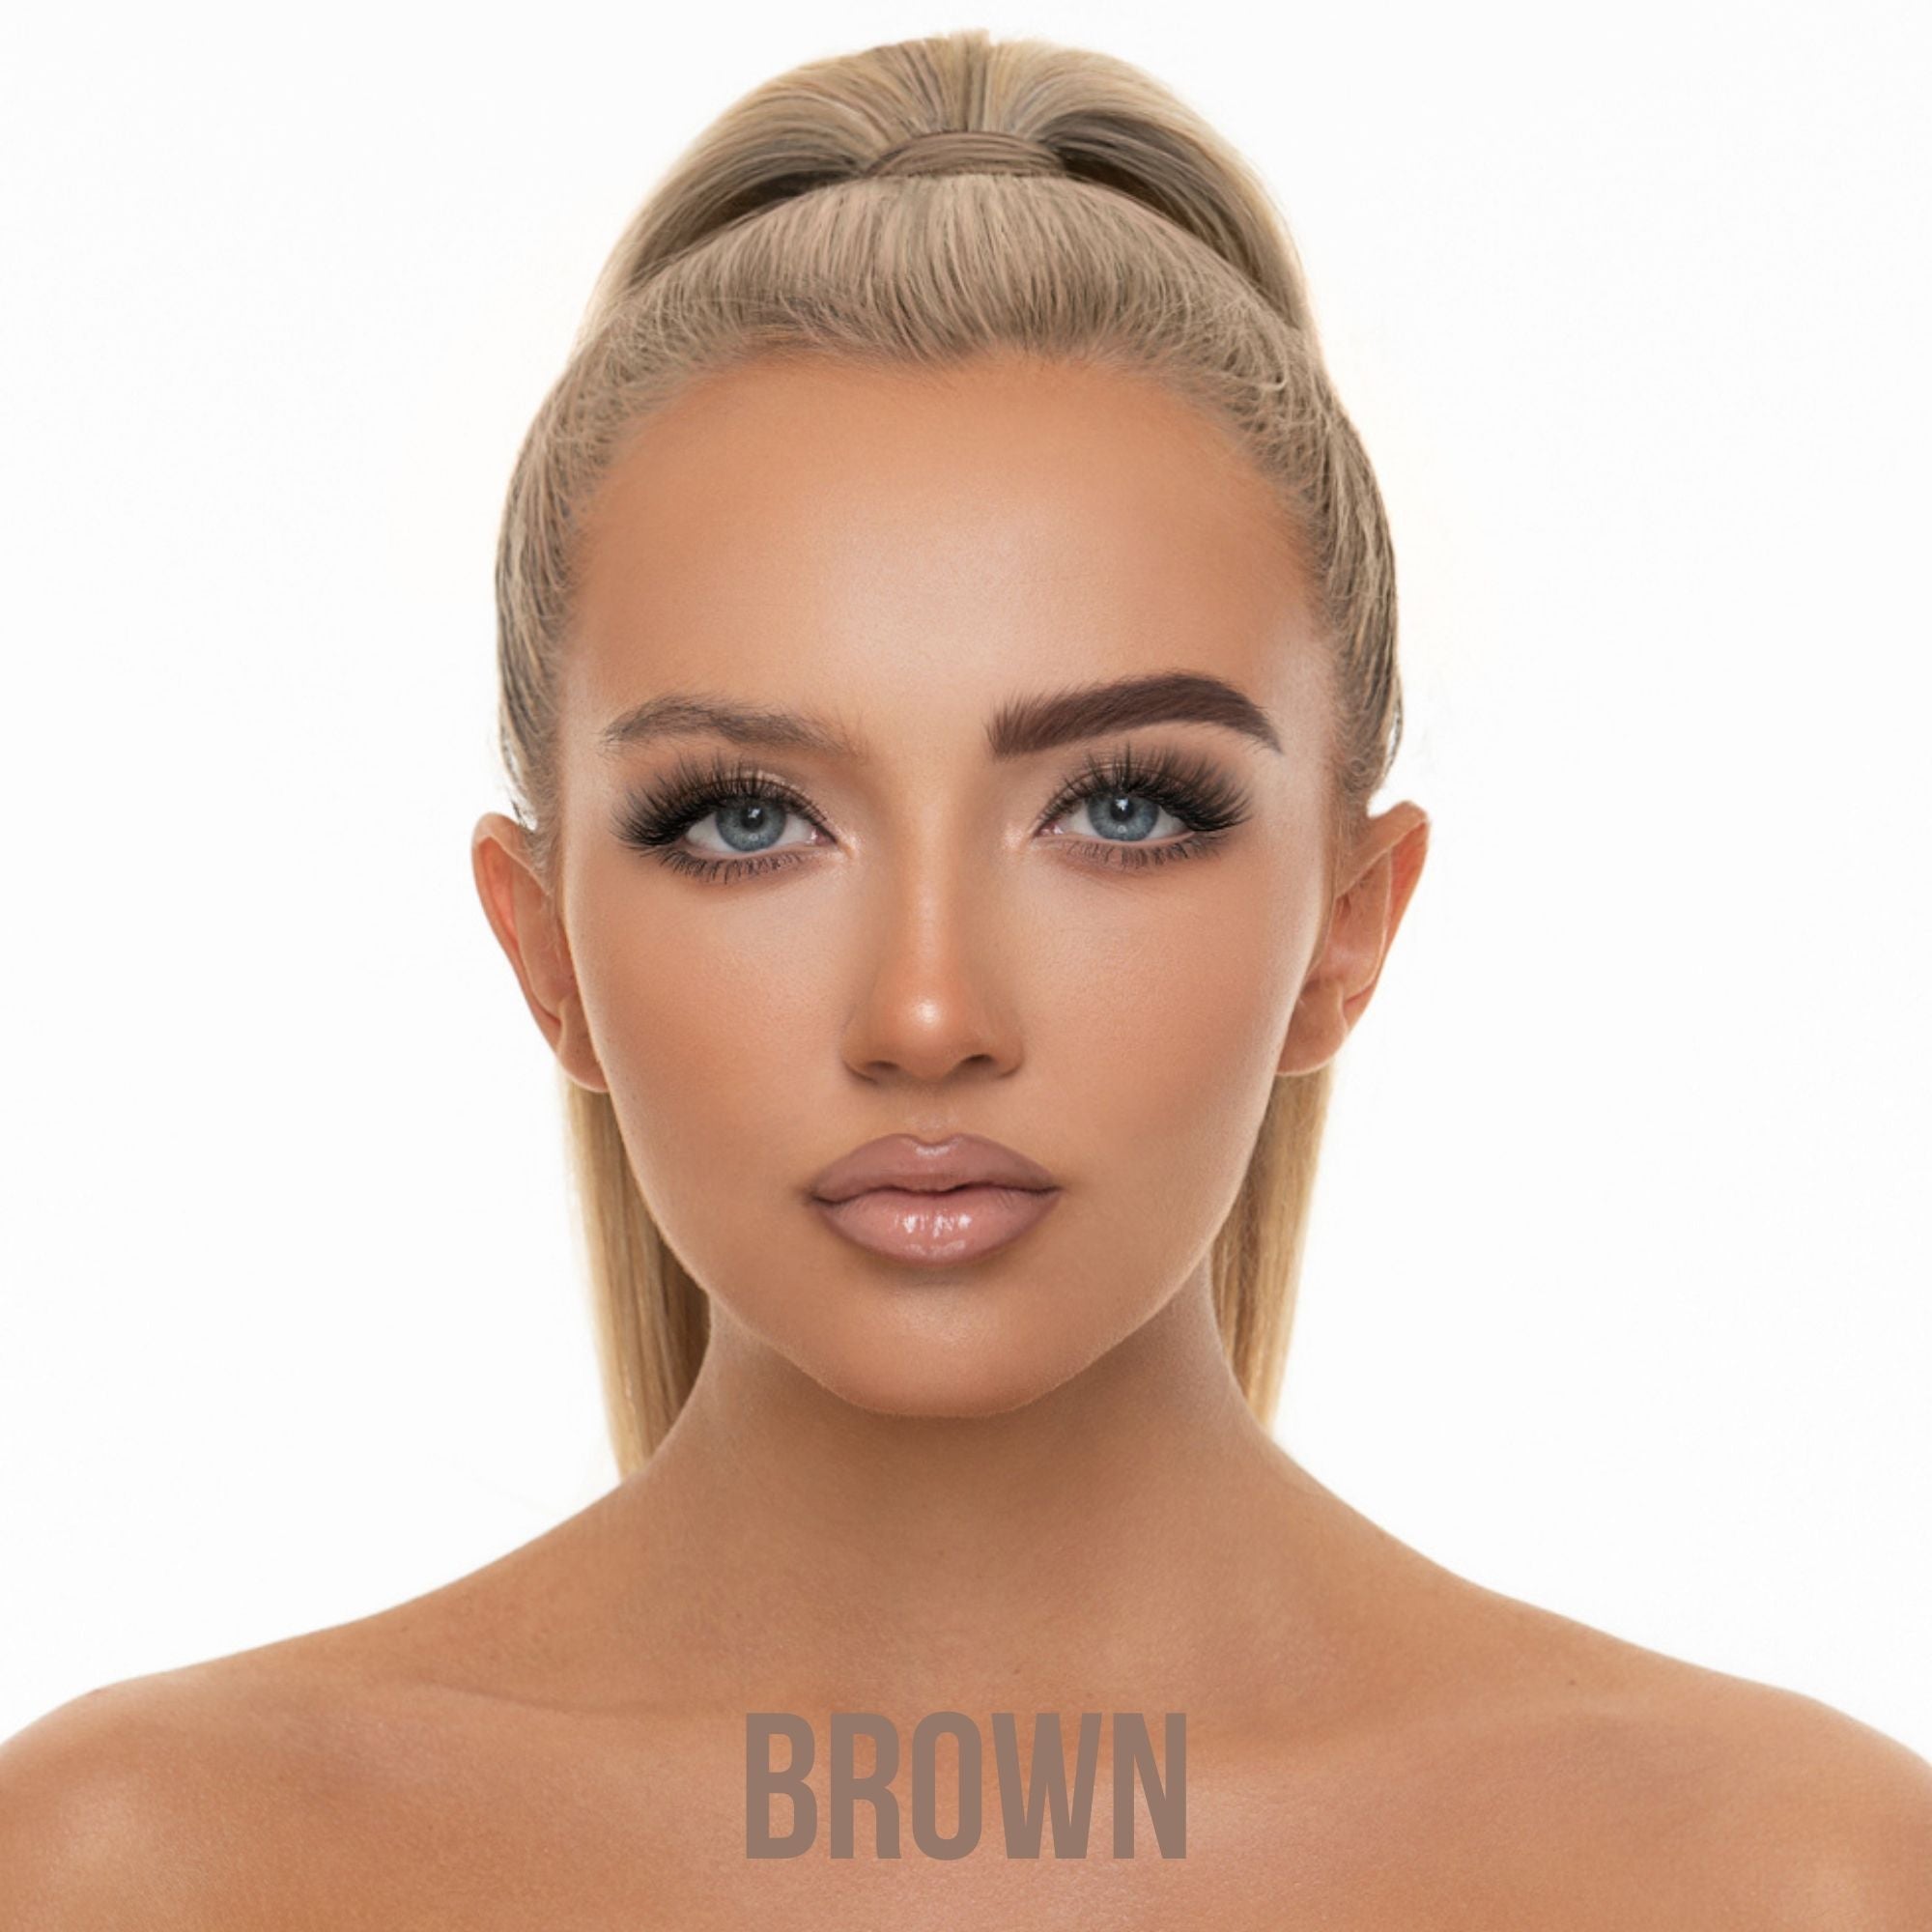 bPerfect Cosmetics - Indestructi'Brow Lock and Load Eye Brow Set - Brown